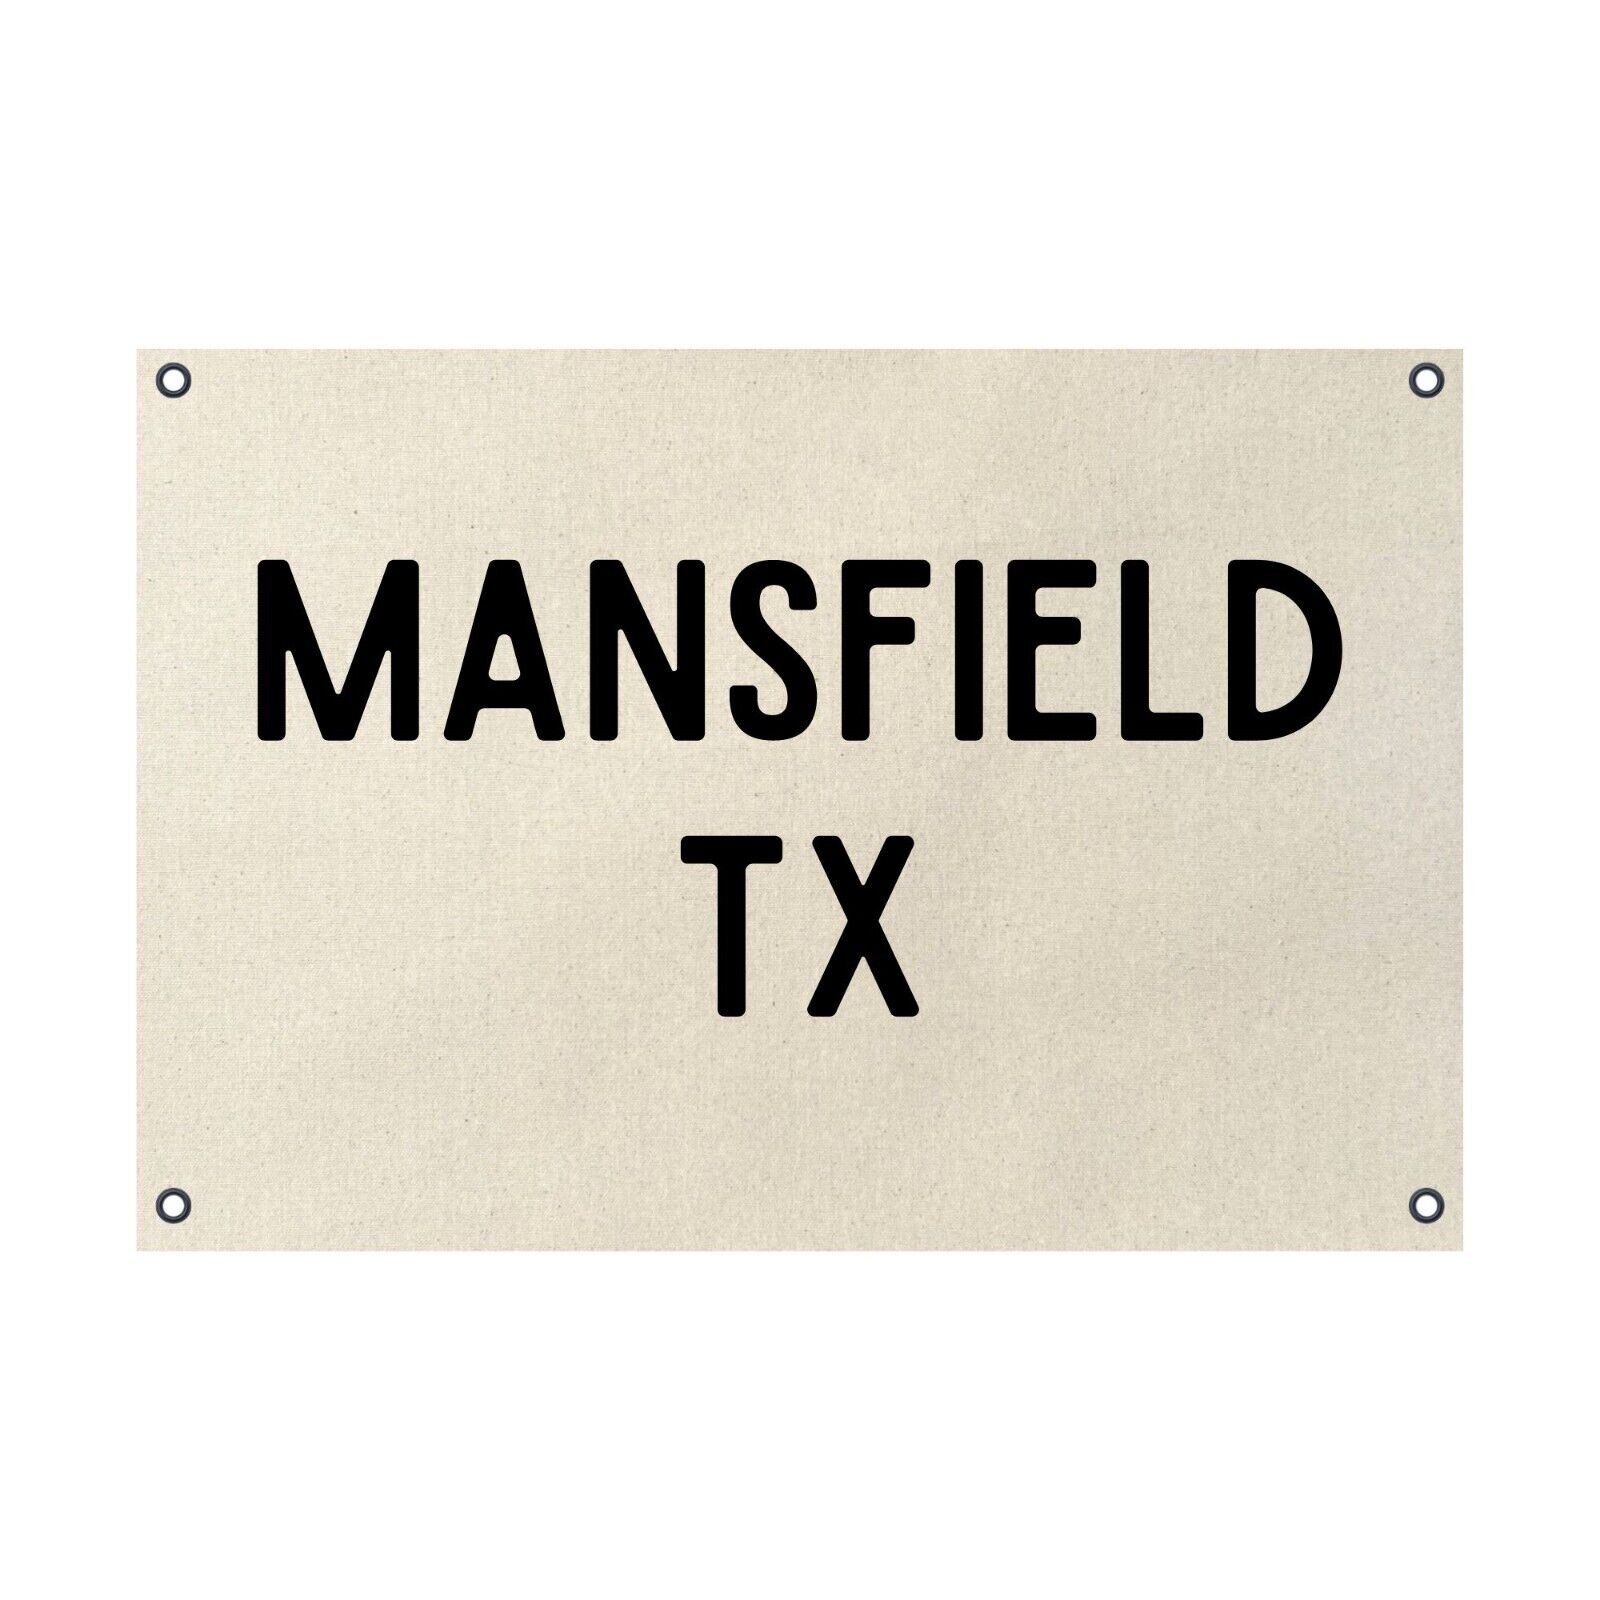 Mansfield Texas TX Natural Cotton Canvas Poster 24x36